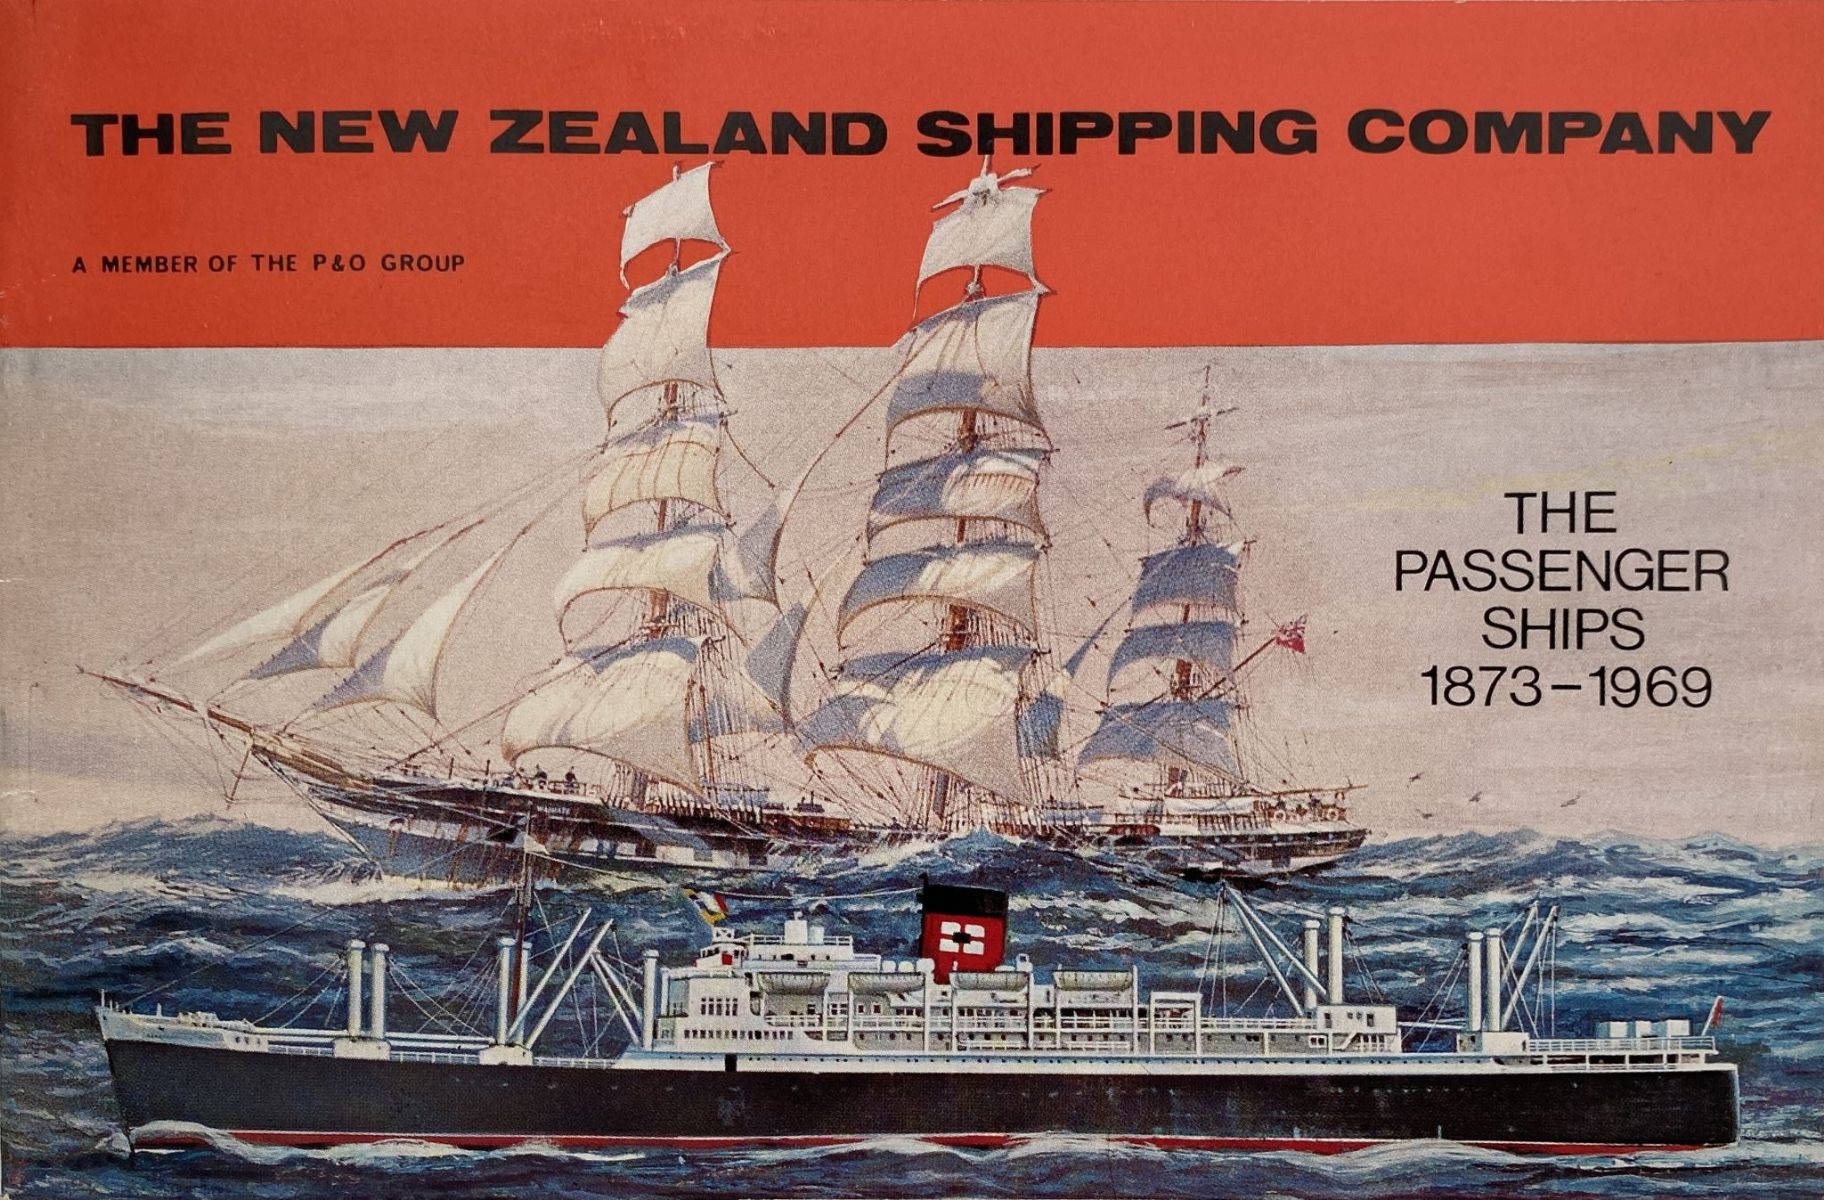 THE NEW ZEALAND SHIPPING COMPANY: The Passenger Ships 1873-1969